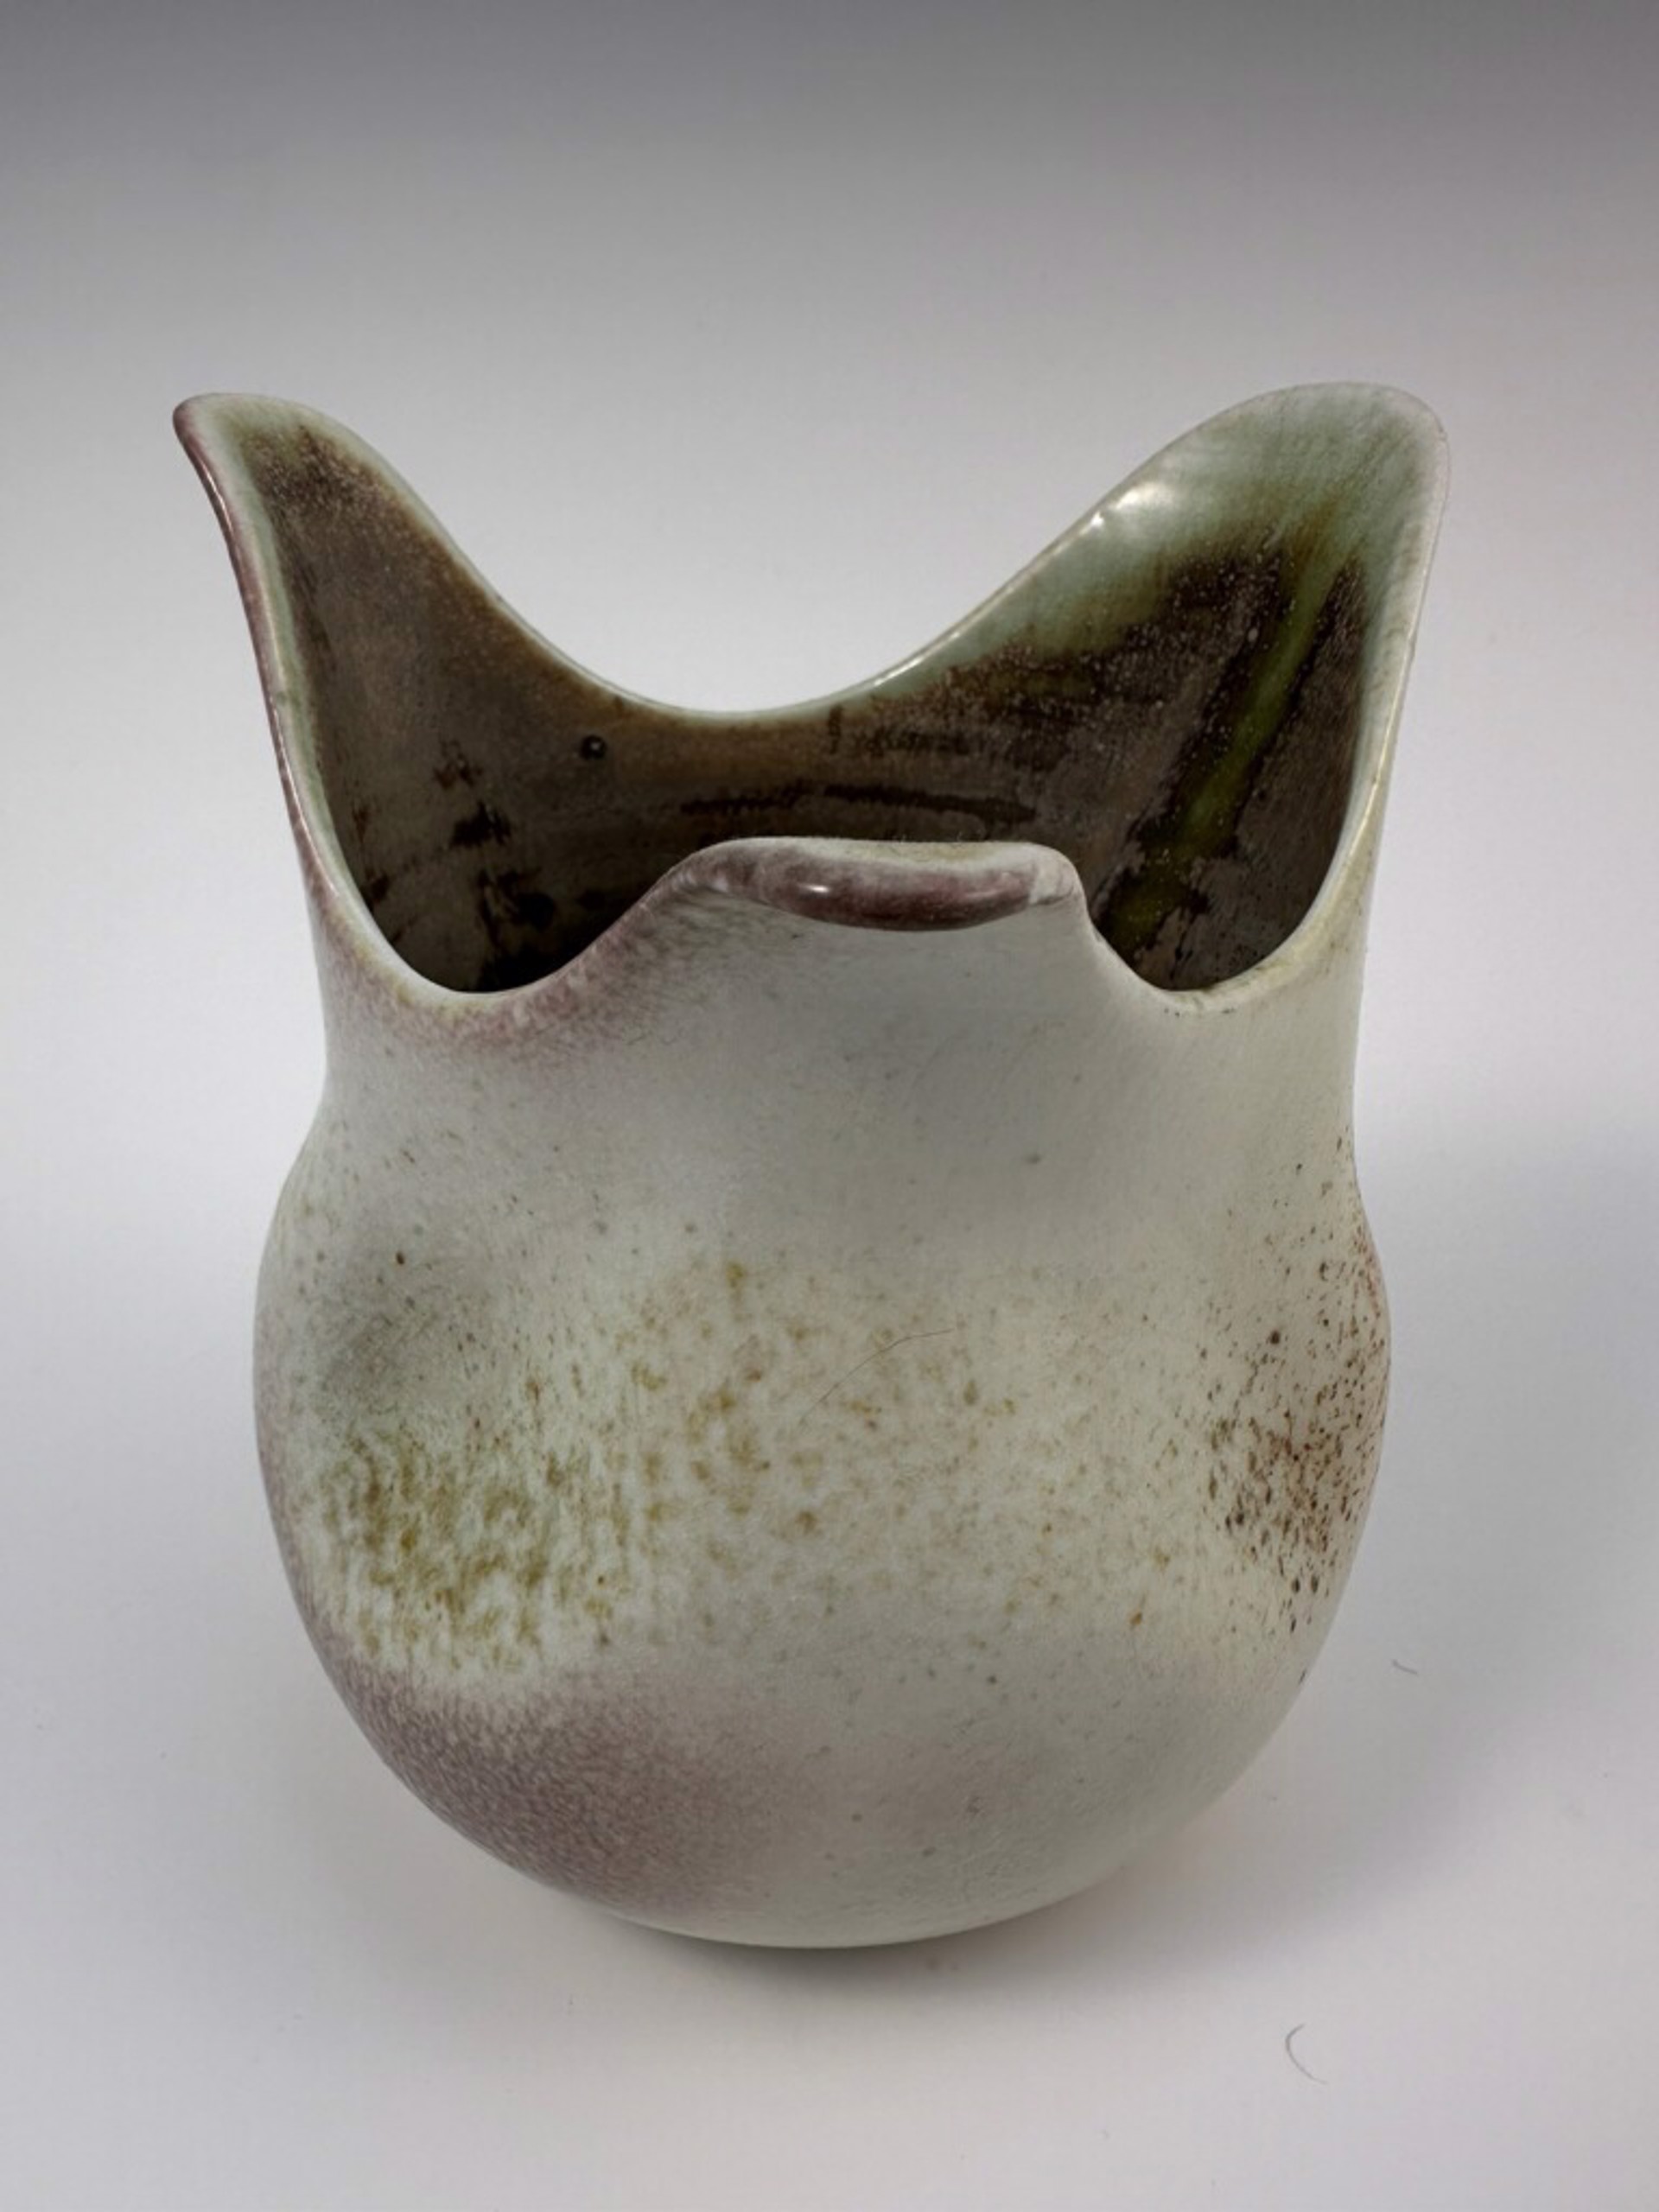 Vase 22 by David LaLomia